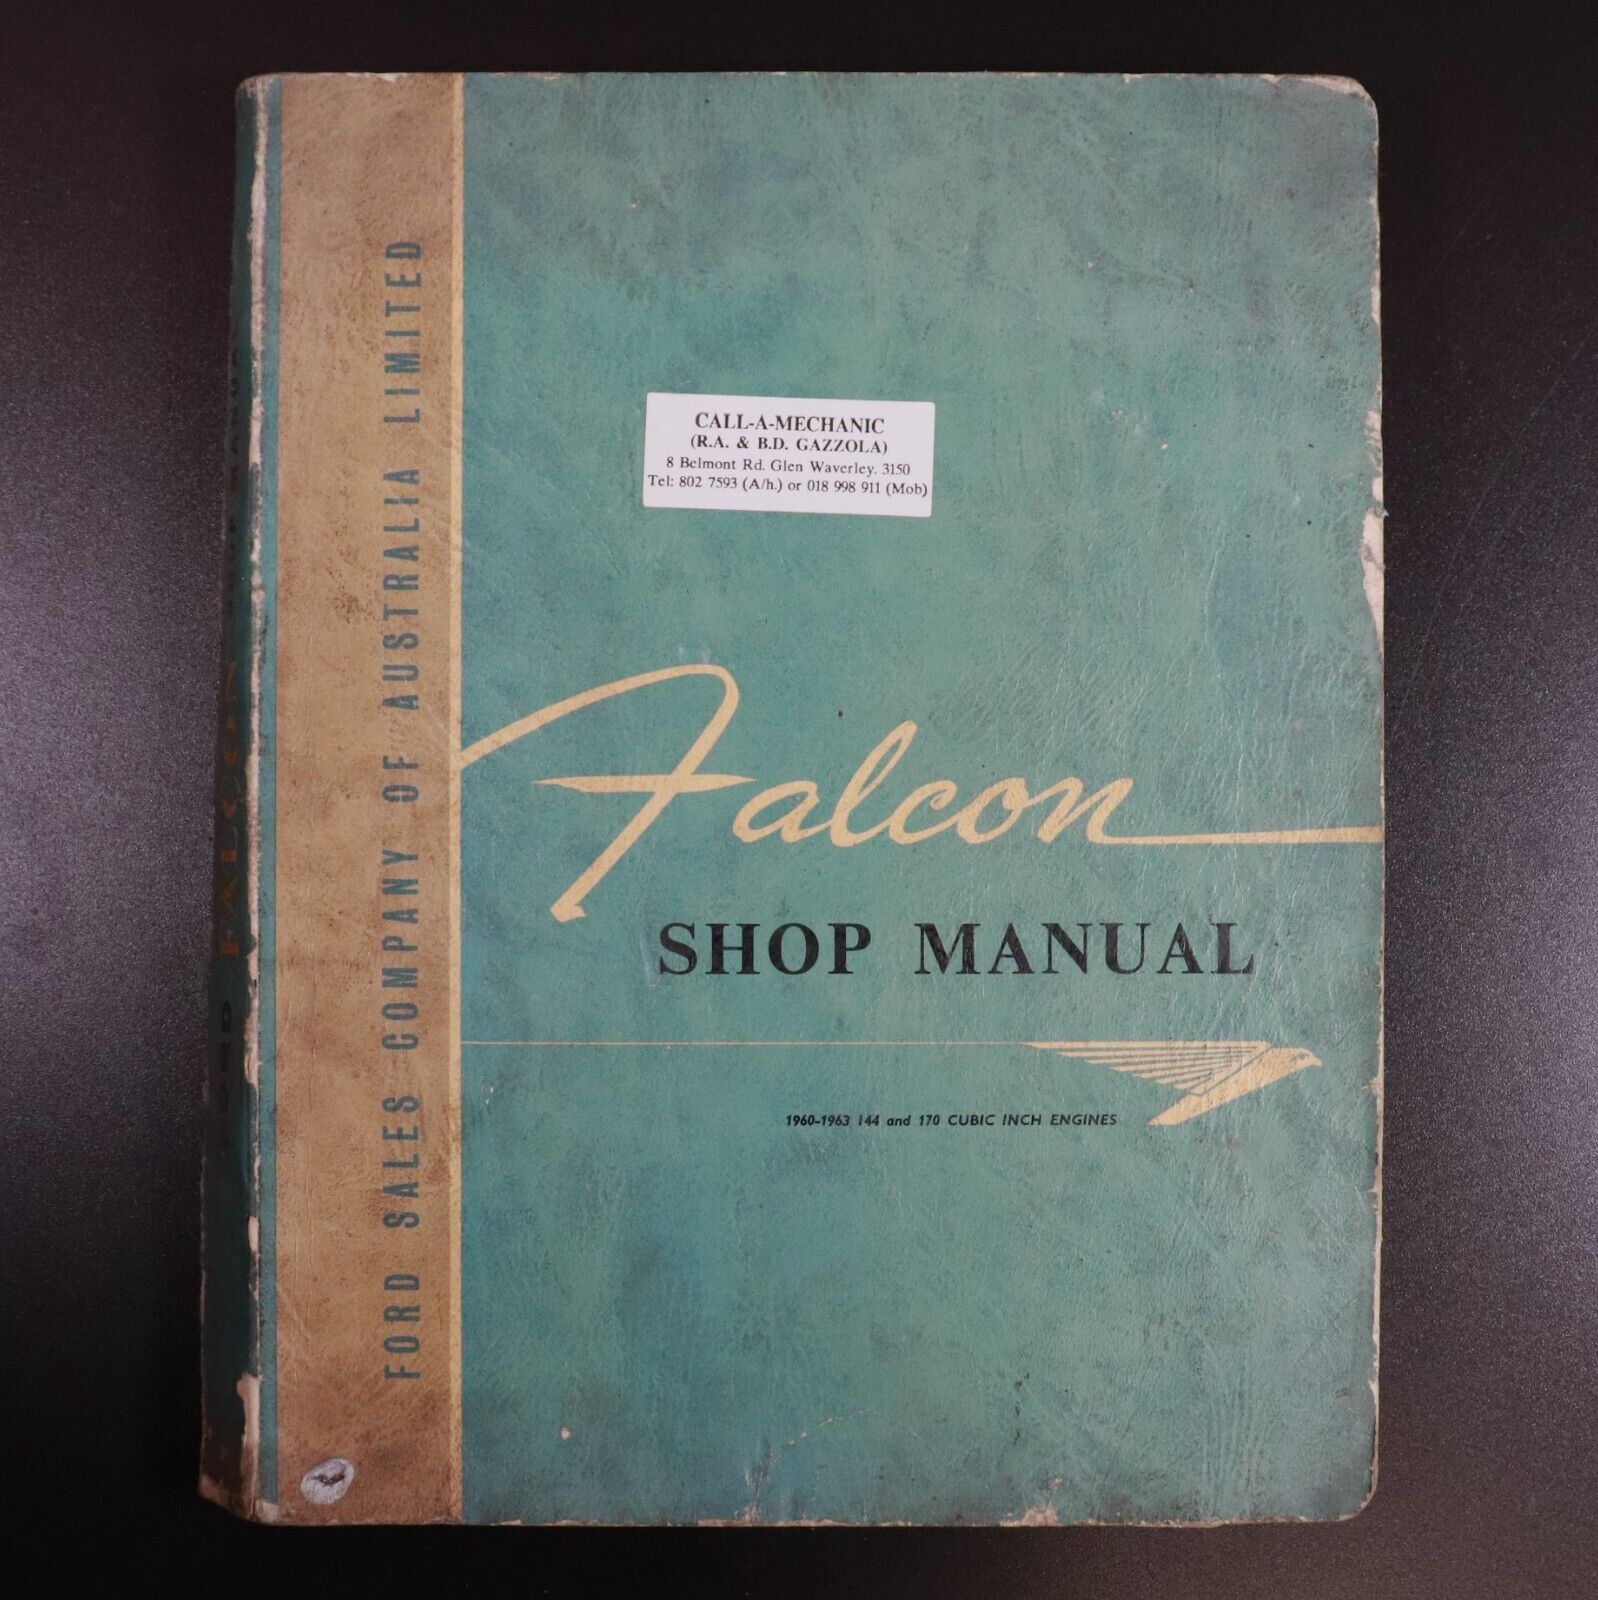 c1965 Ford Falcon Shop Manual Workshop Auto Reference Book 'XK' Falcon